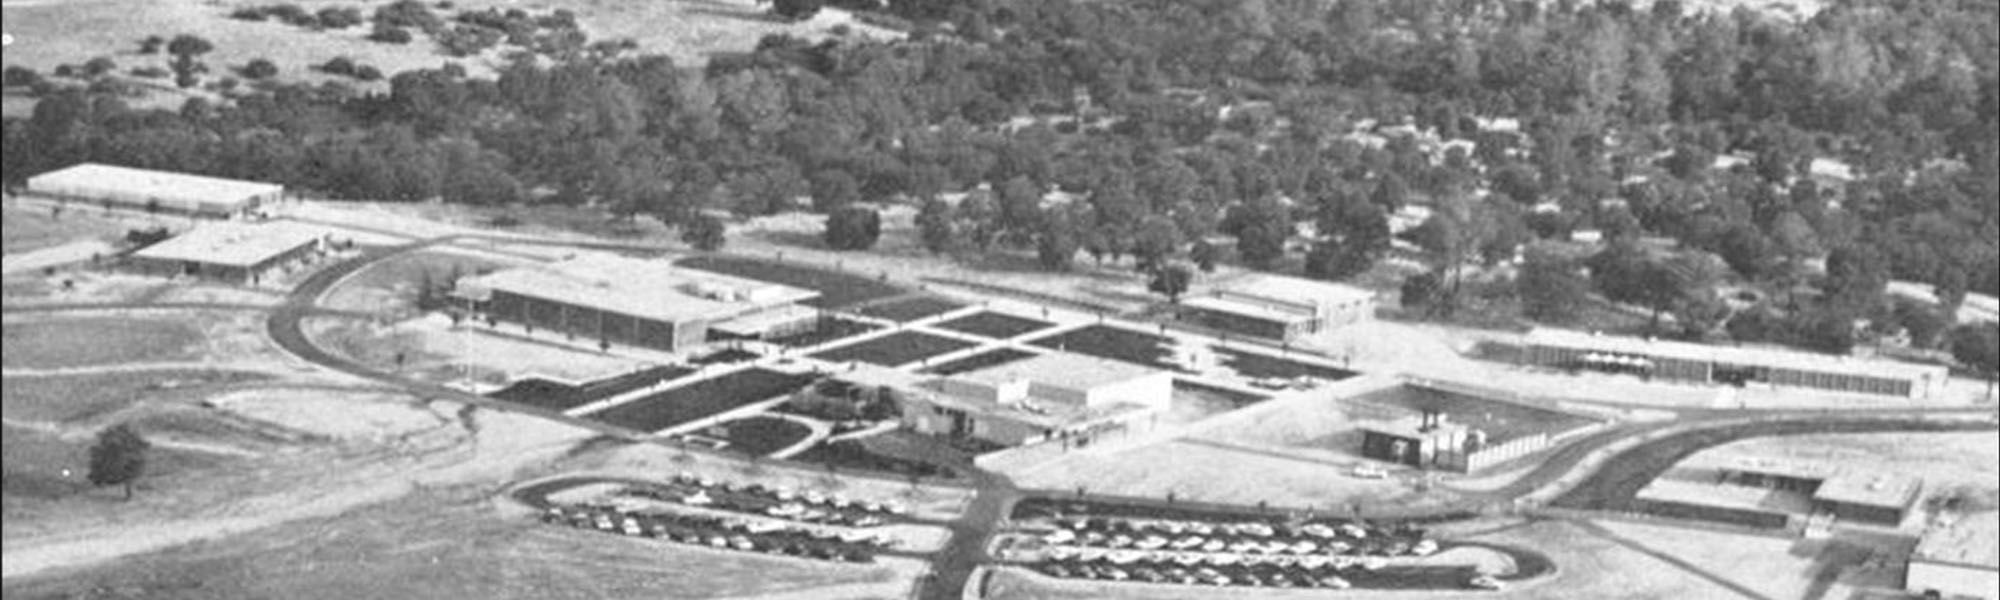 Timeline Sierra Campus 1960s